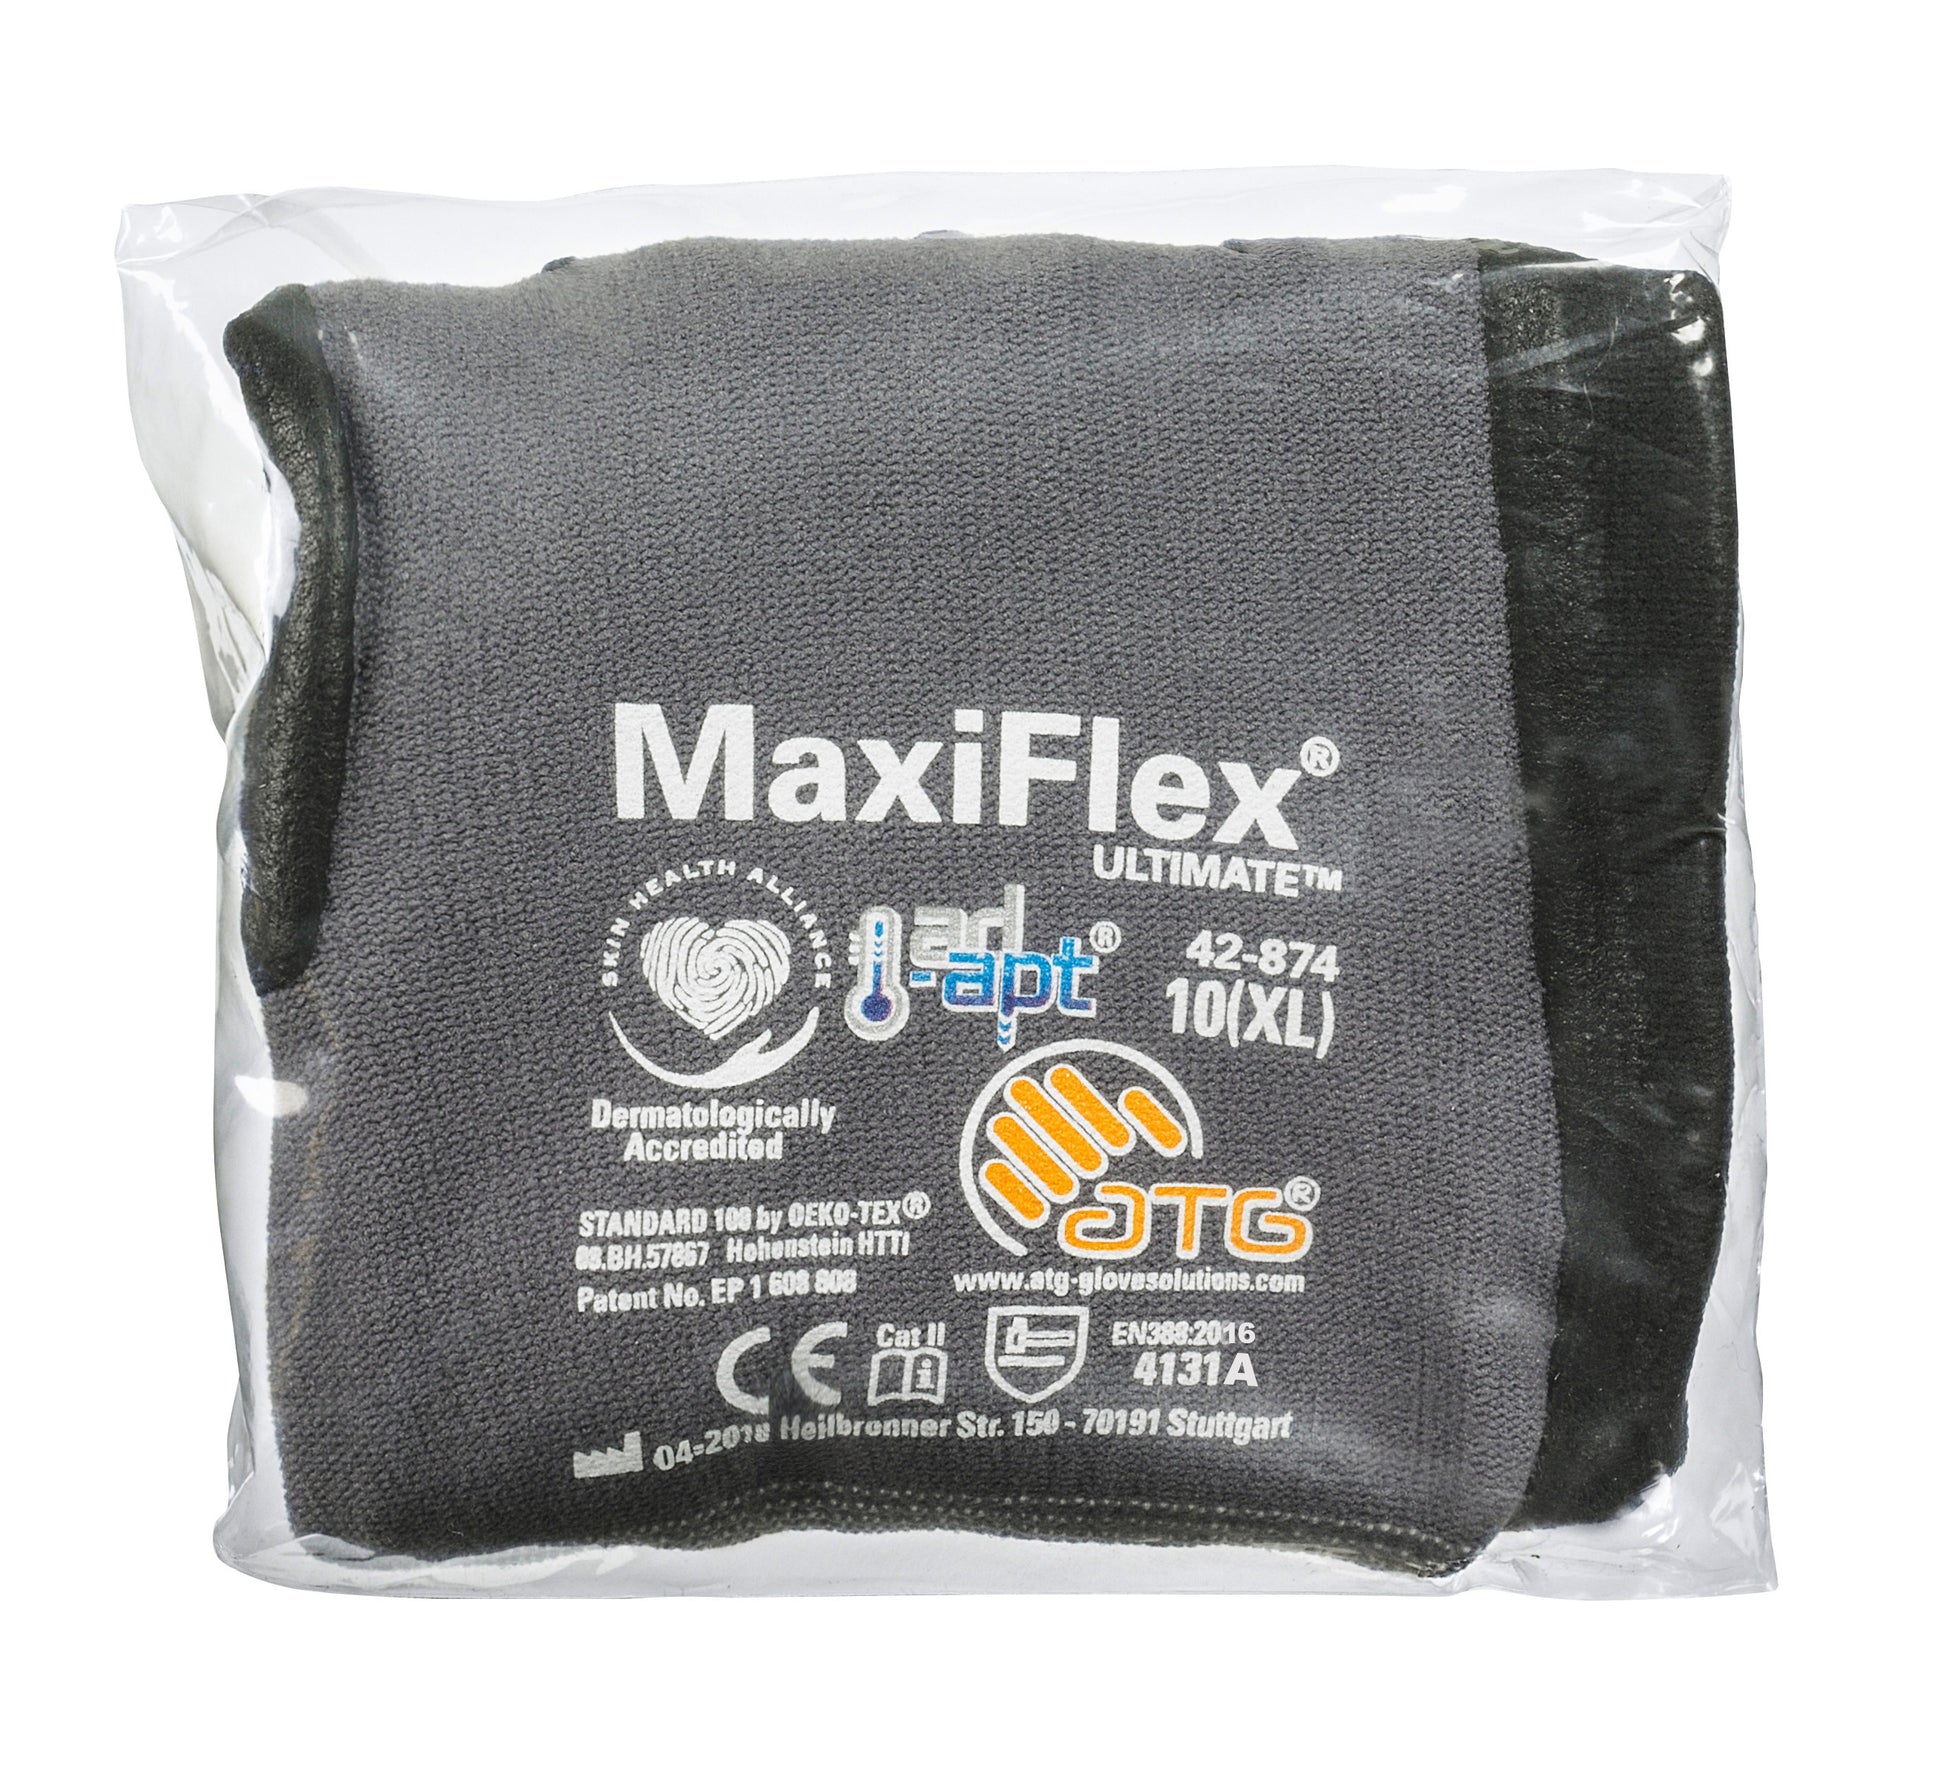 MaxiFlex® Ultimate™ AD-APT® Nylon-Strickhandschuhe (42-874V), Automatenverp.-arbeitskleidung-gmbh